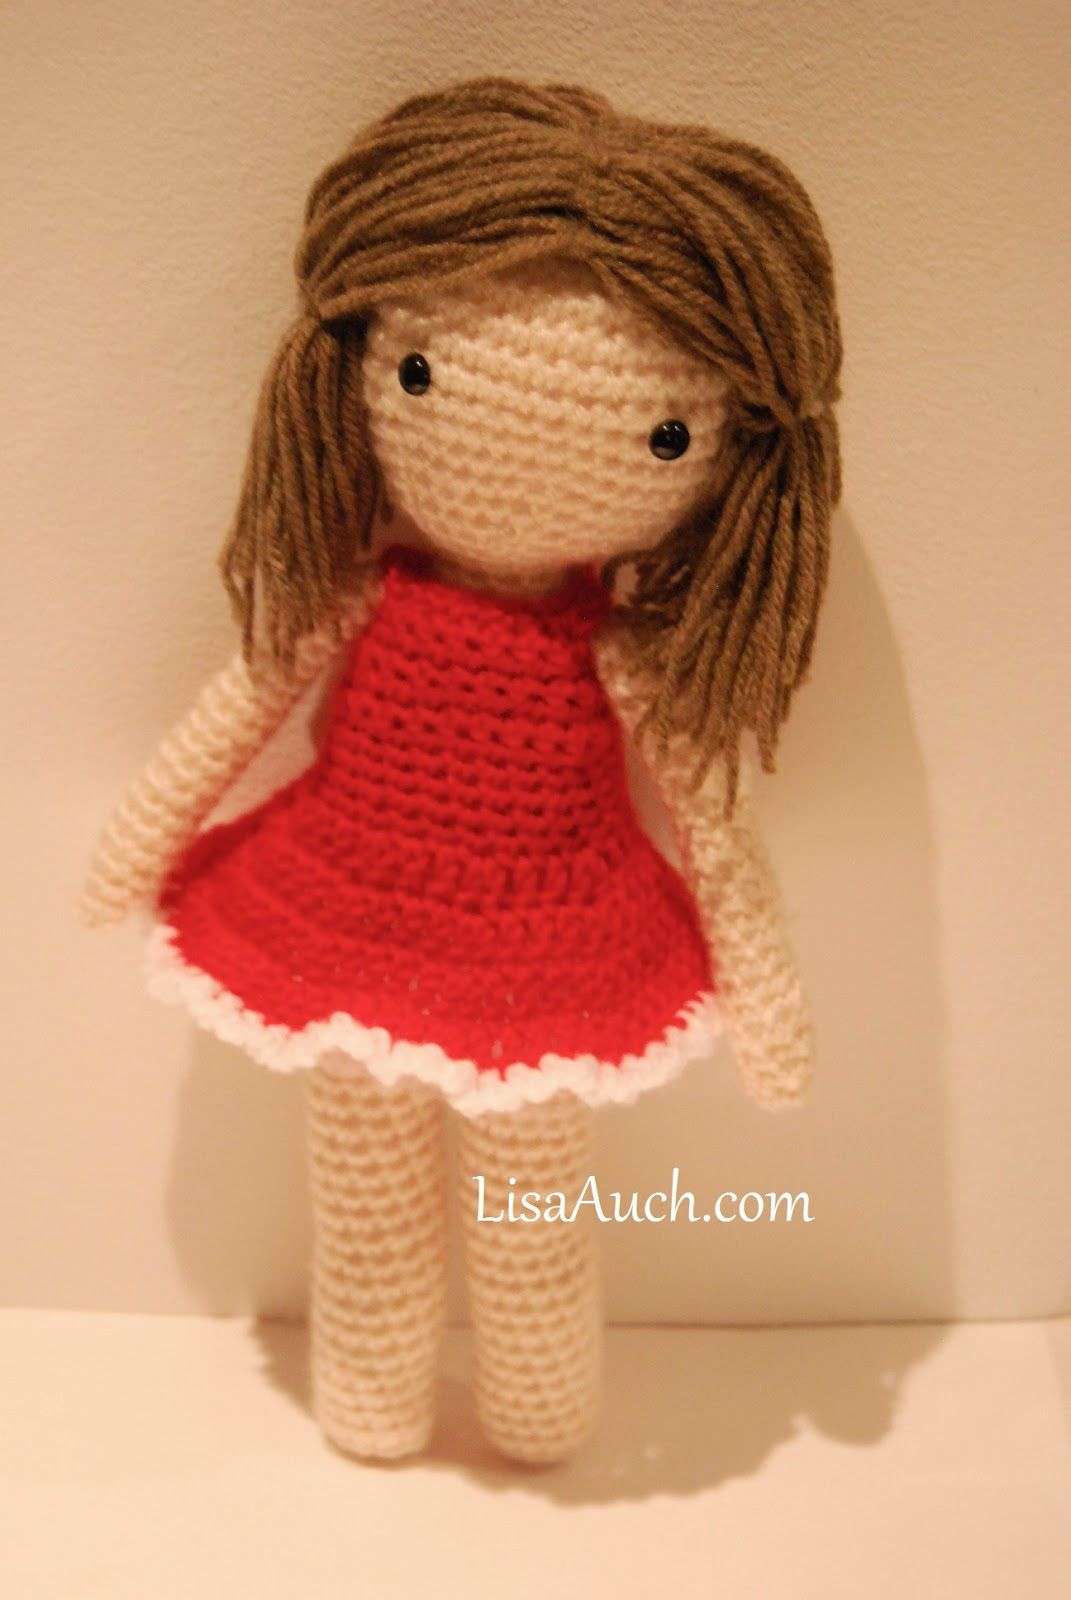 Crochet Amigurumi Doll Pattern Little Crochet Red Dress Pattern For Your Basic Amigurumi Doll Free